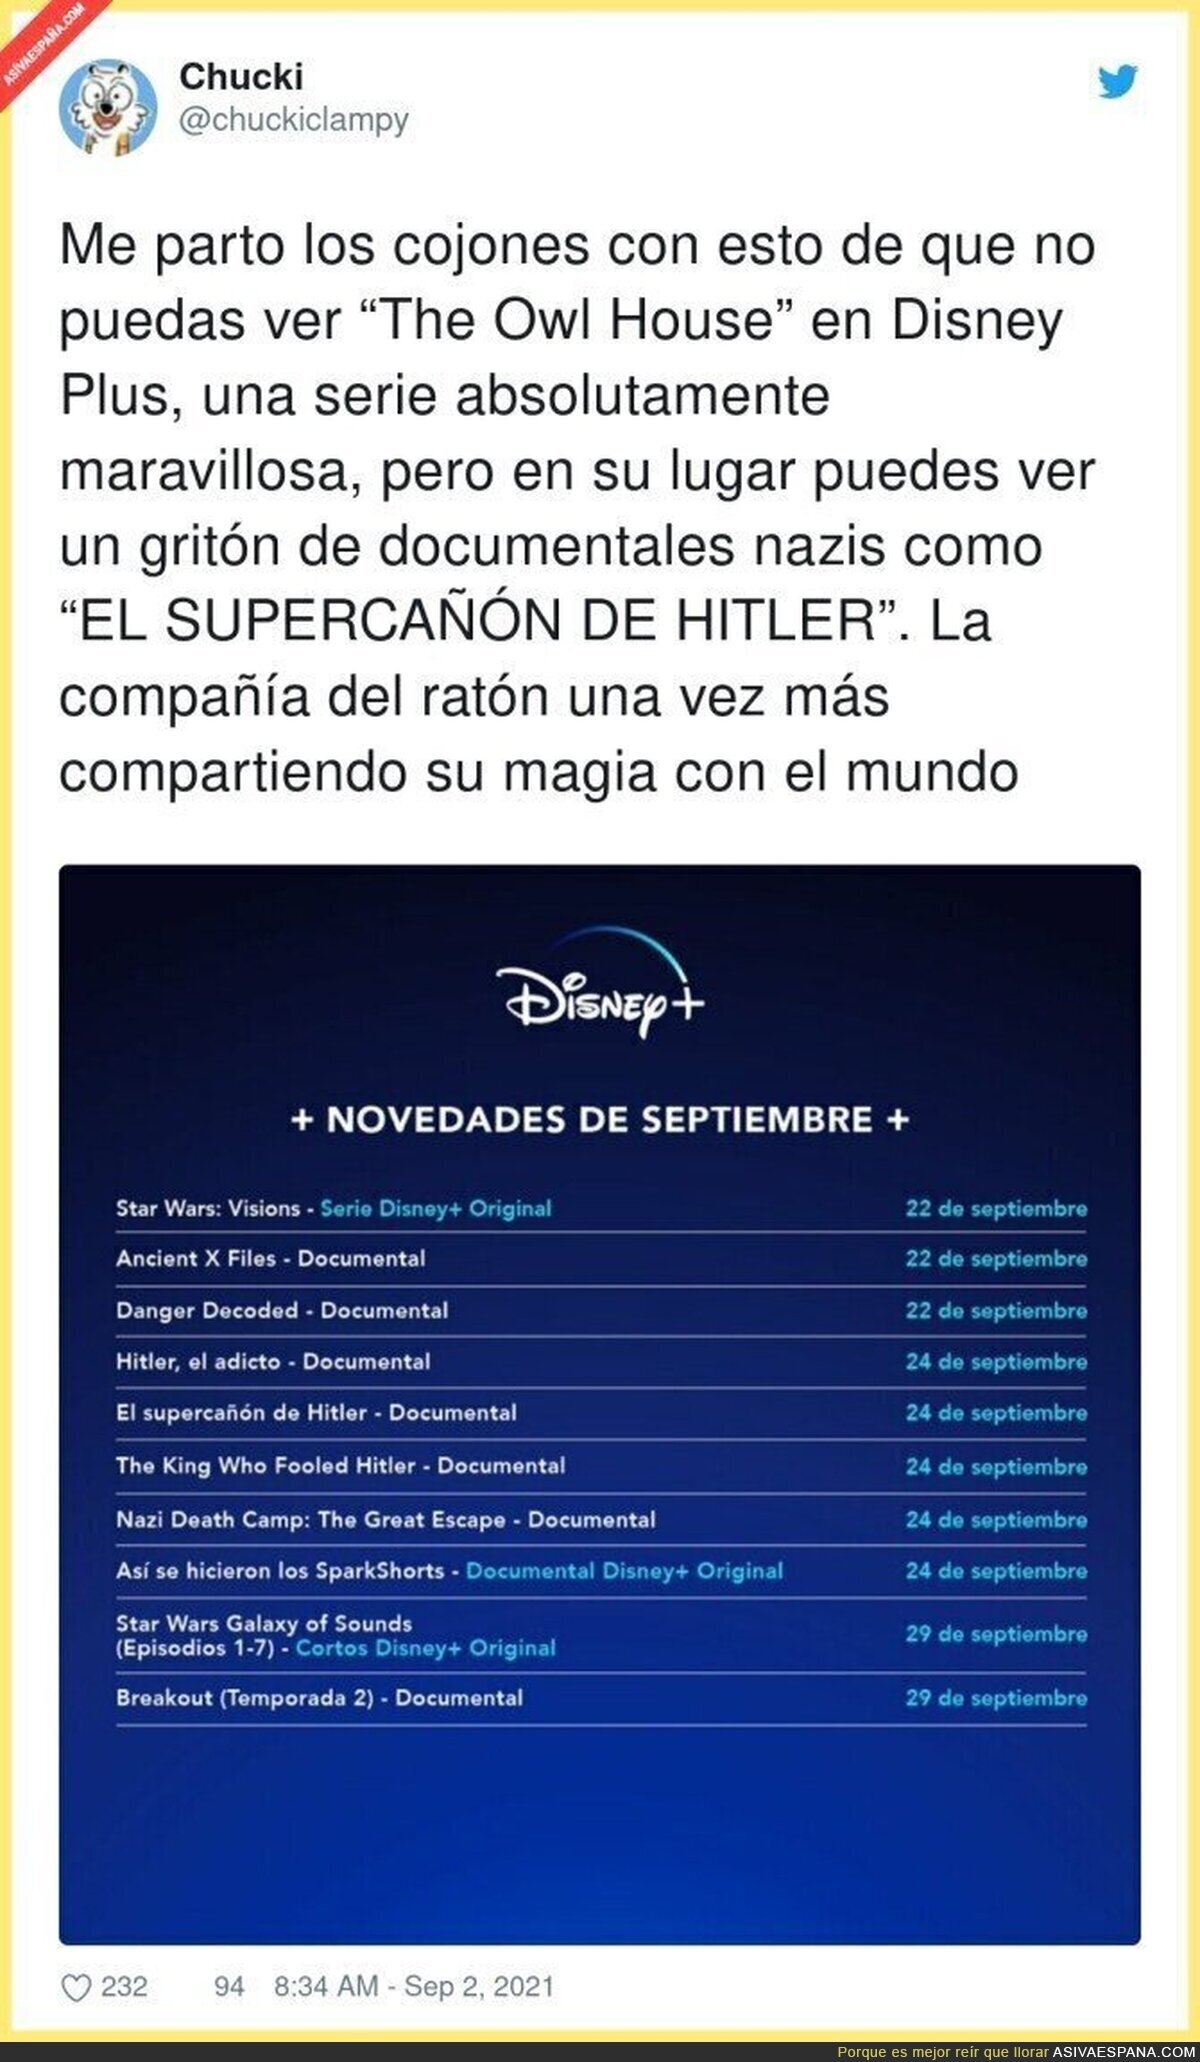 Gracias por tanto Disney+